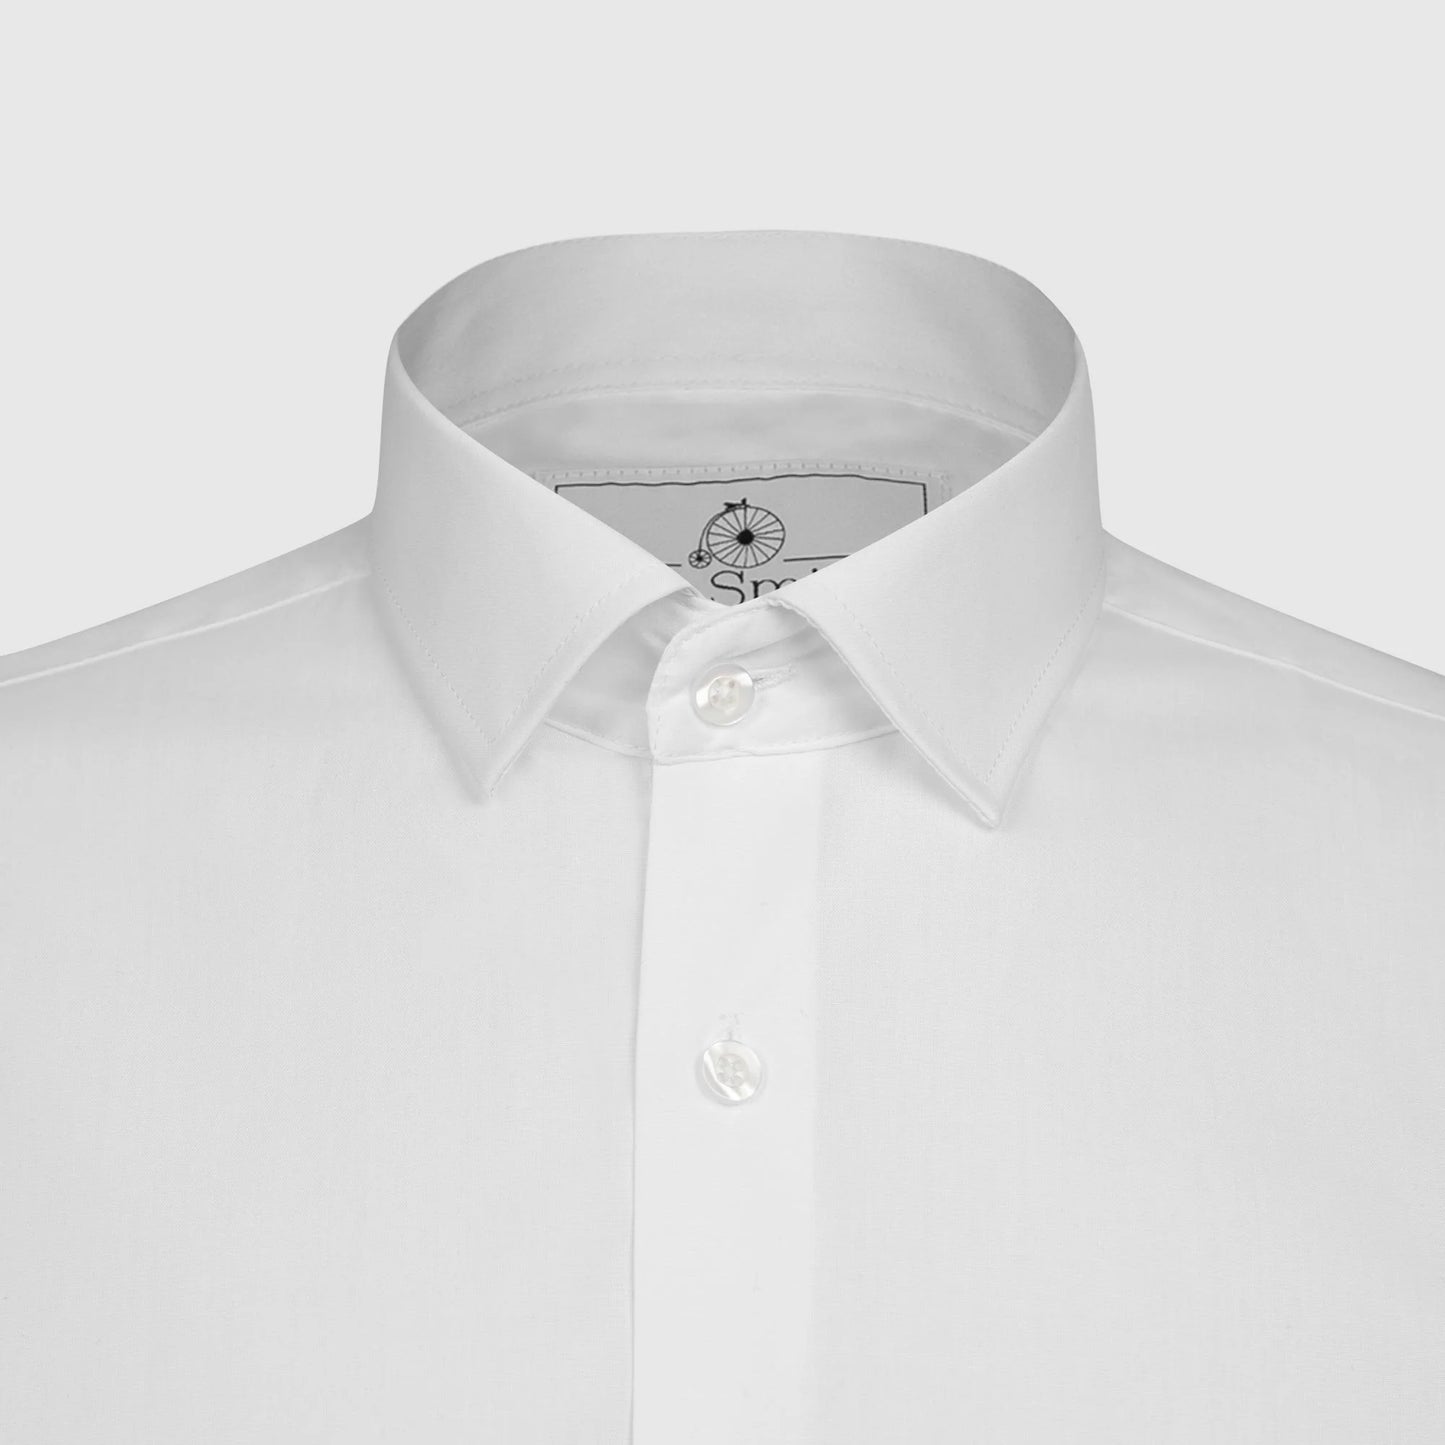 LA Smith White Shirt